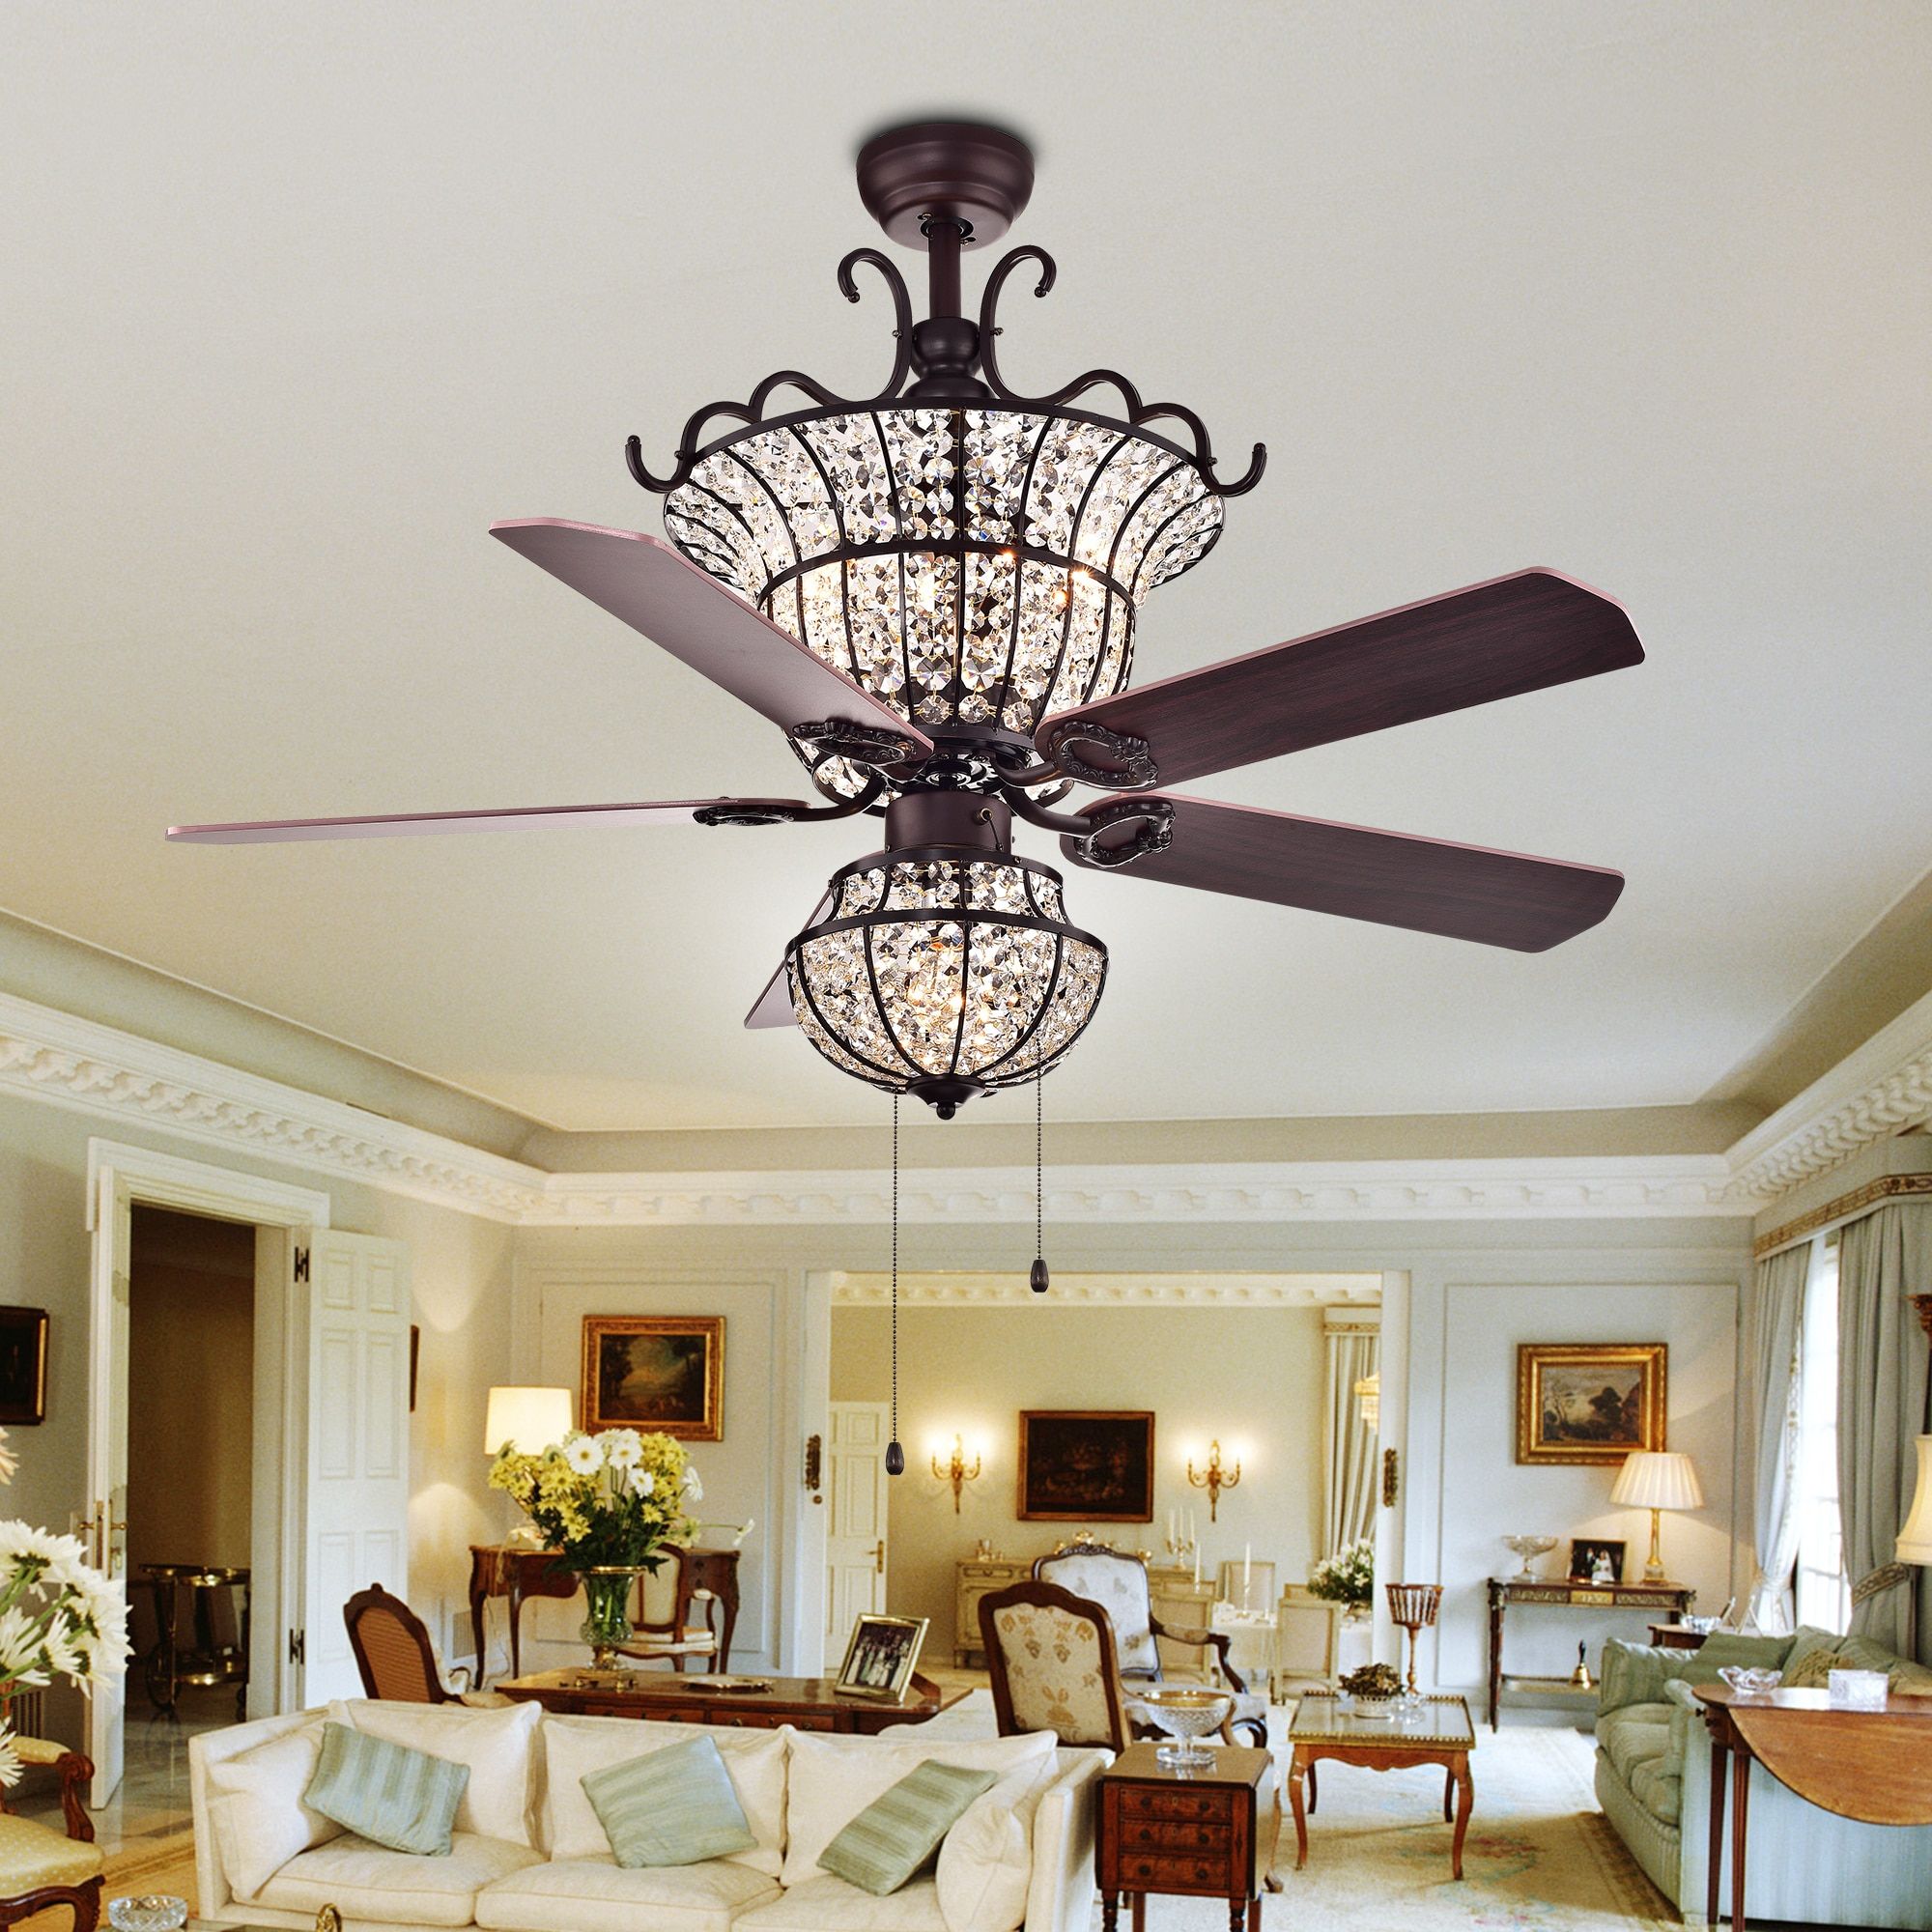 Installing ceiling fan with light kit